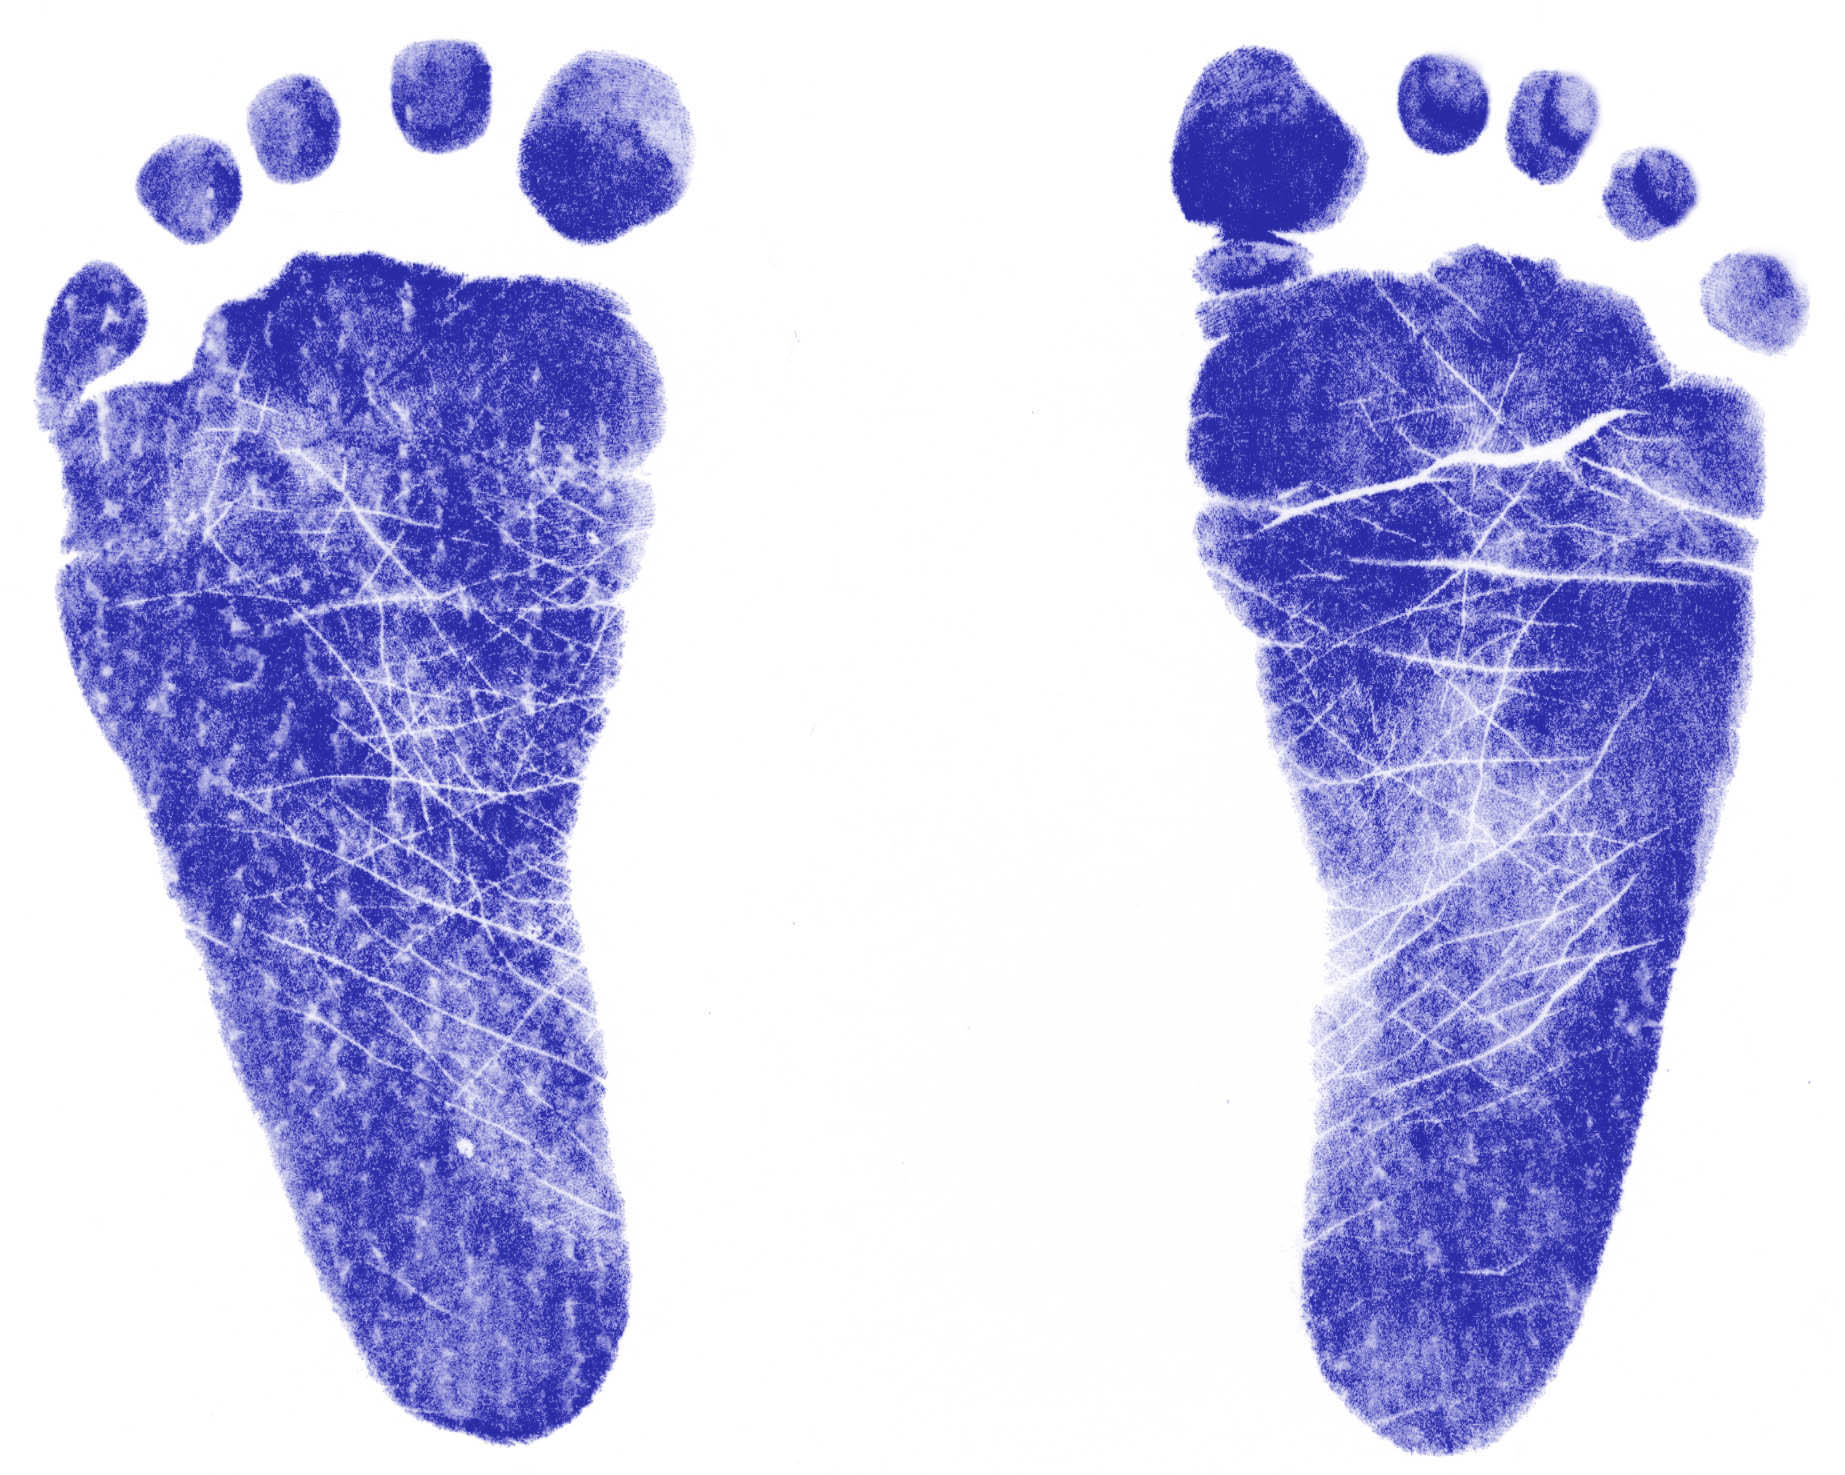 Baby Footprints Wallpaper